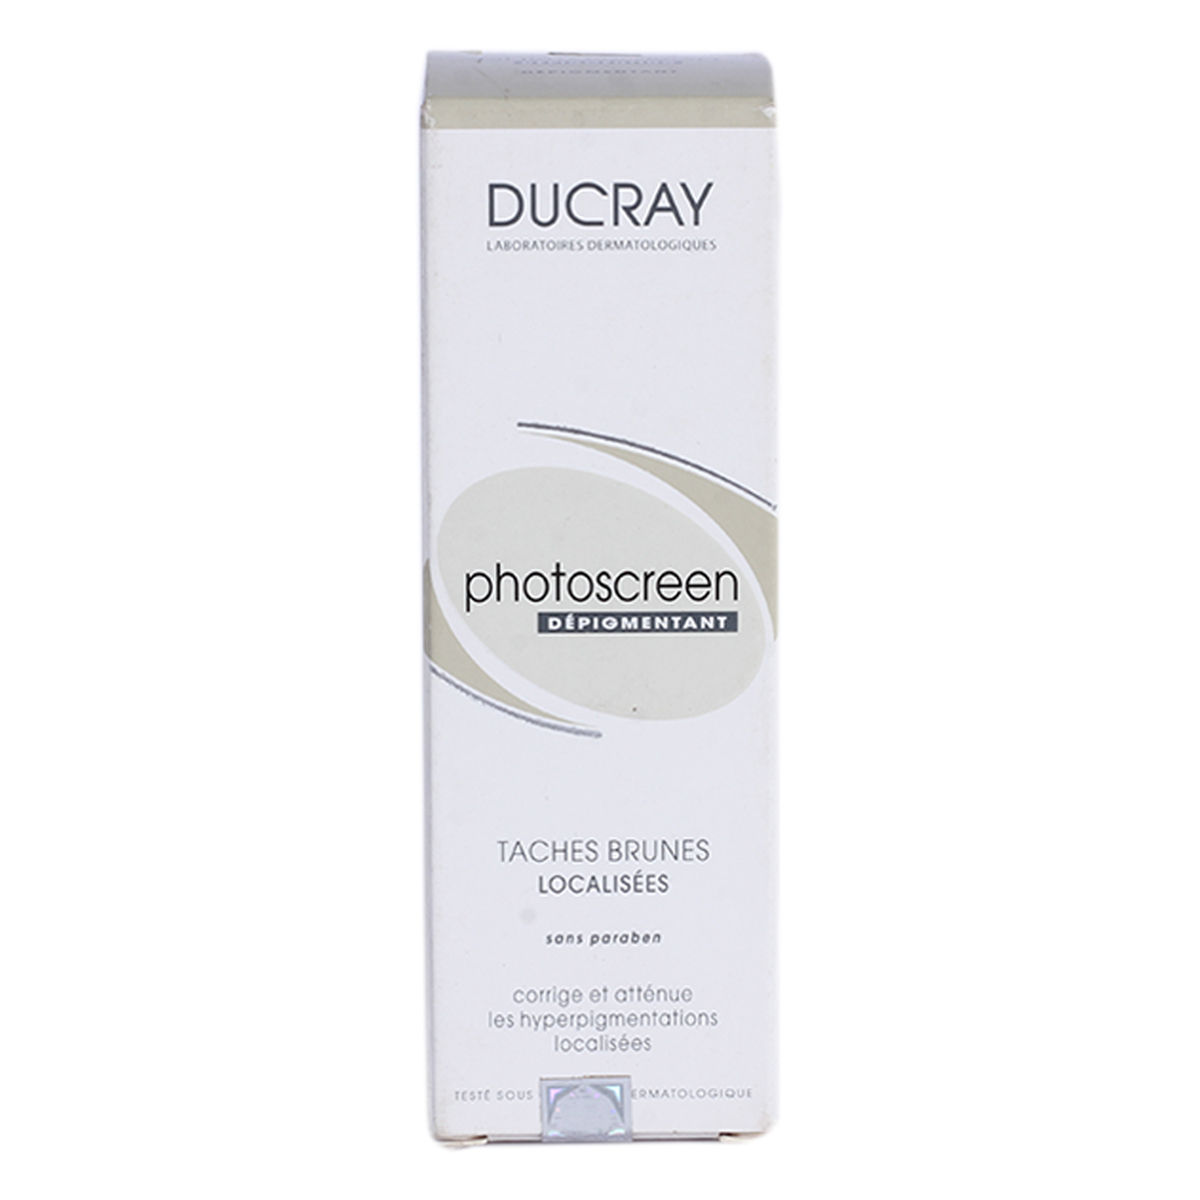 Buy Ducray Photoscreen Depigmenting Cream, 30 ml Online